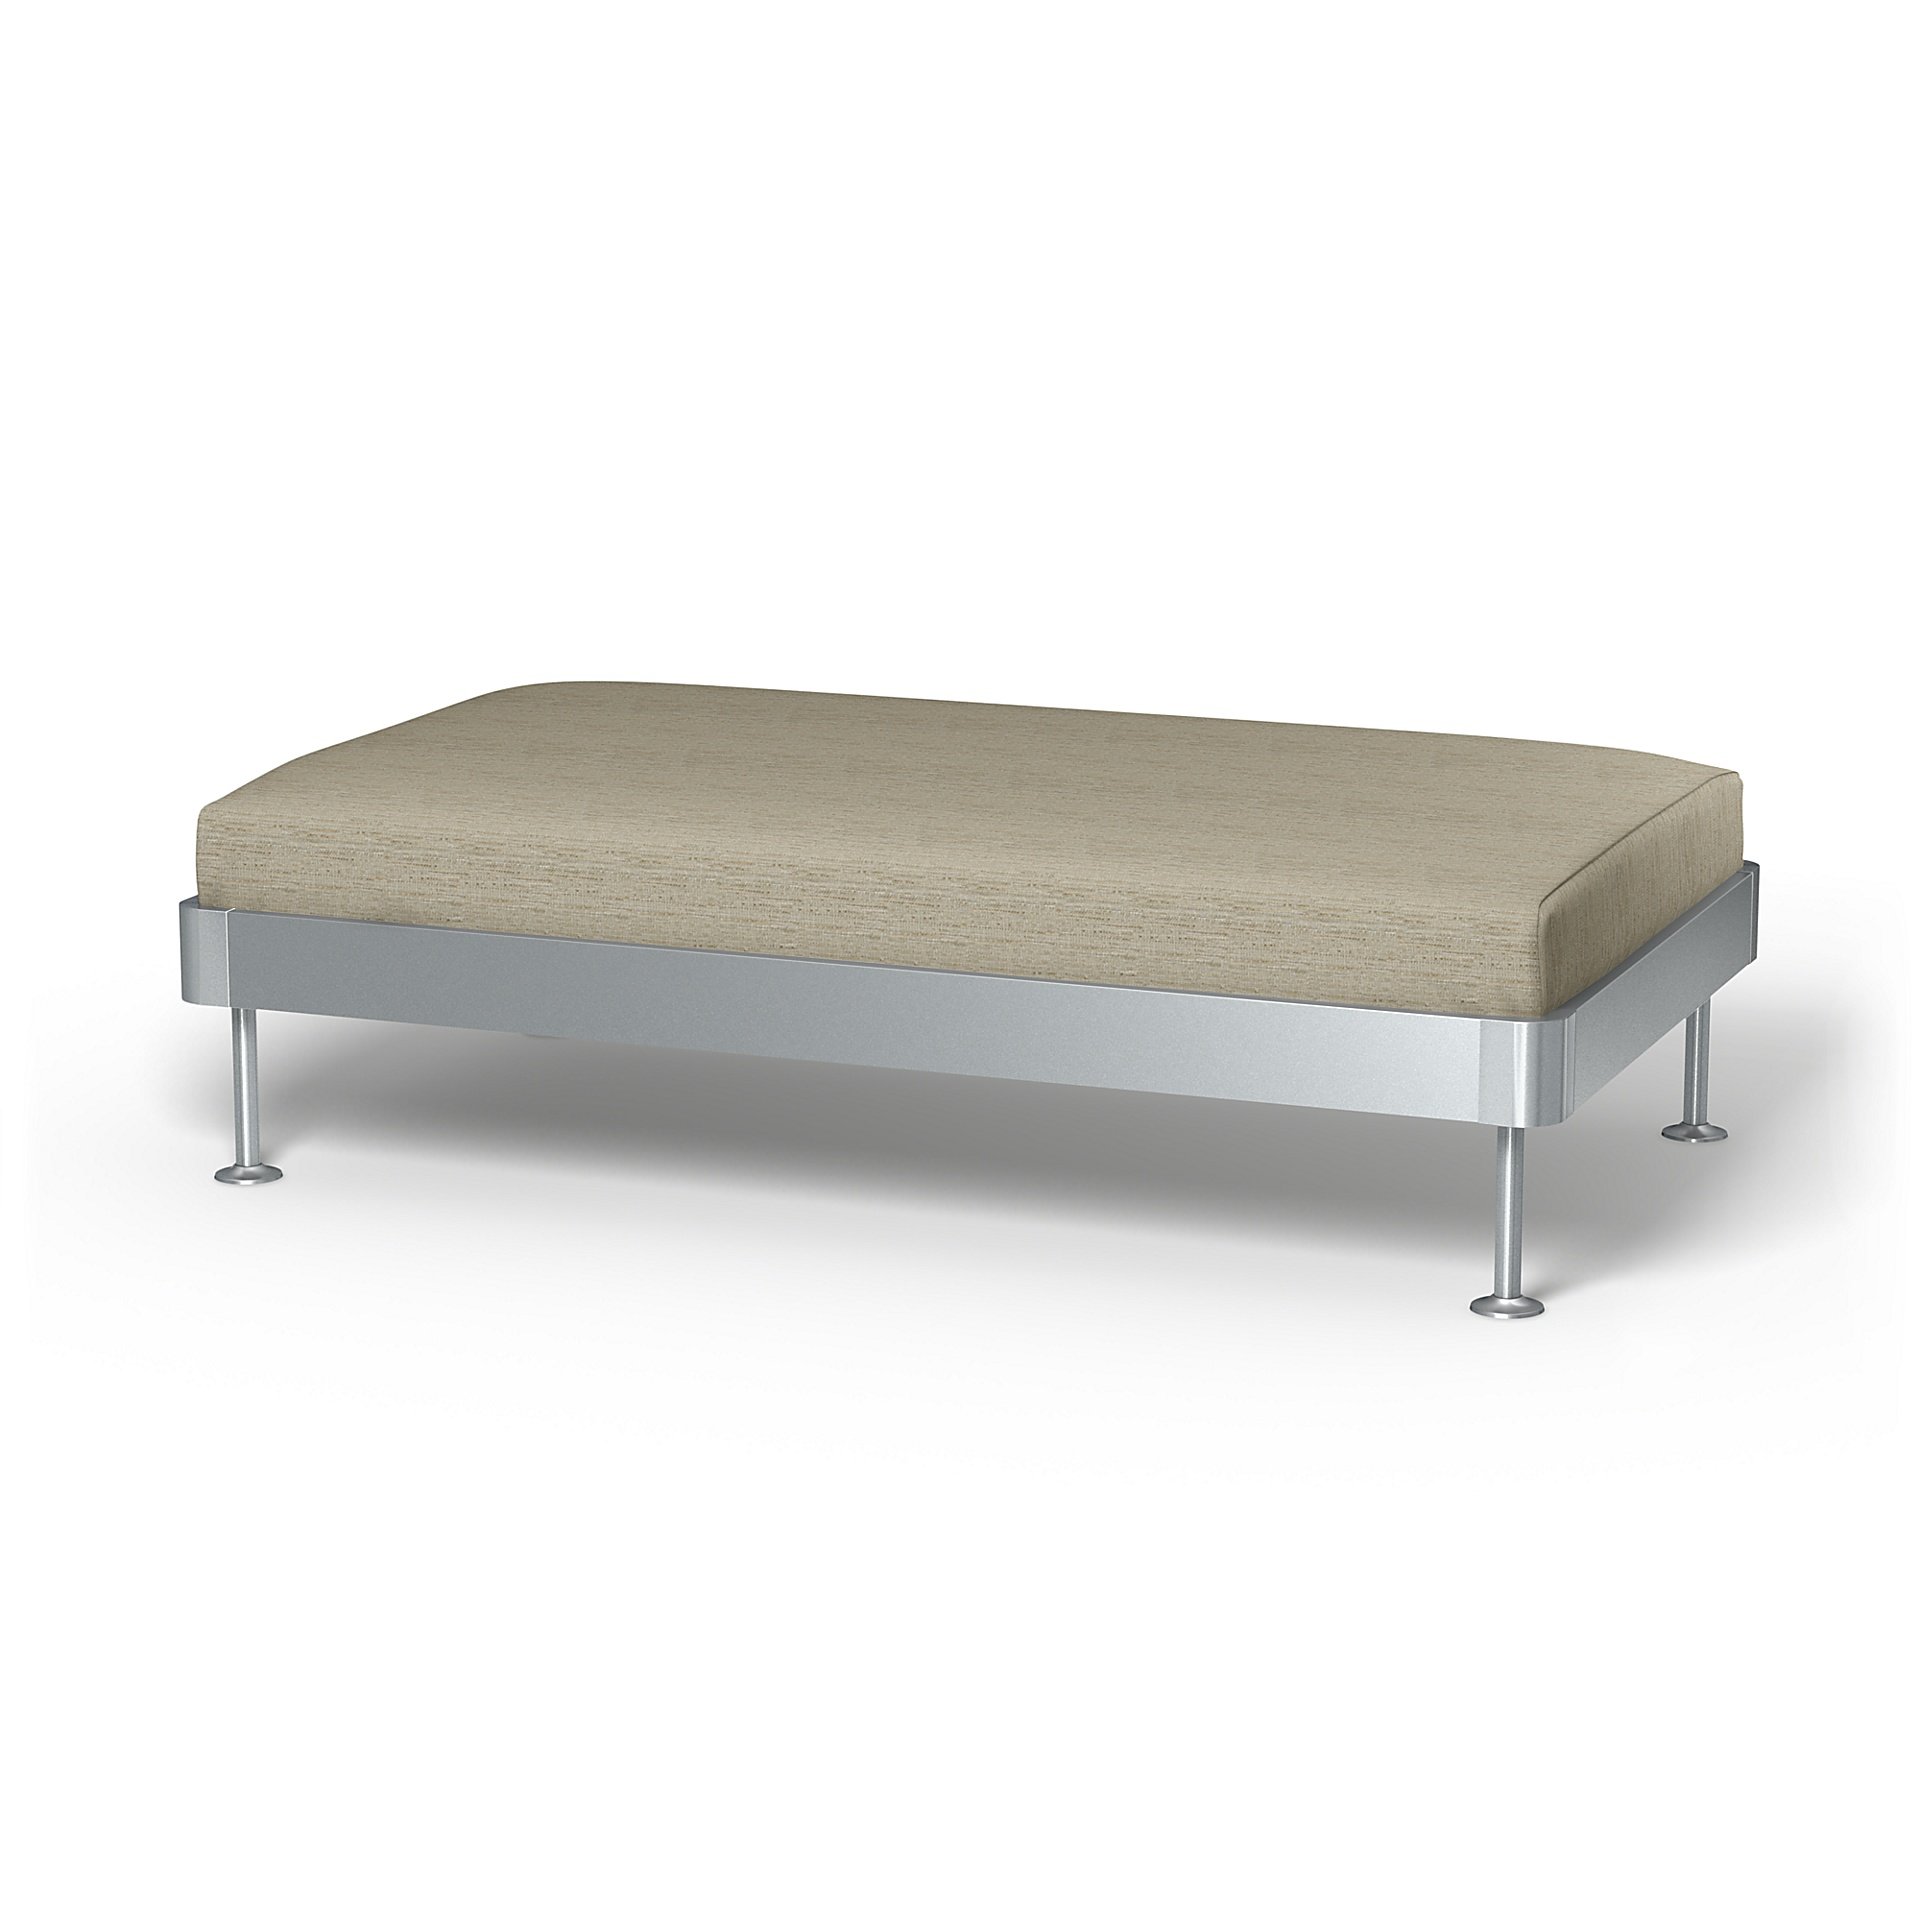 IKEA - Delaktig 2 Seat Platform Cover, Light Sand, Boucle & Texture - Bemz